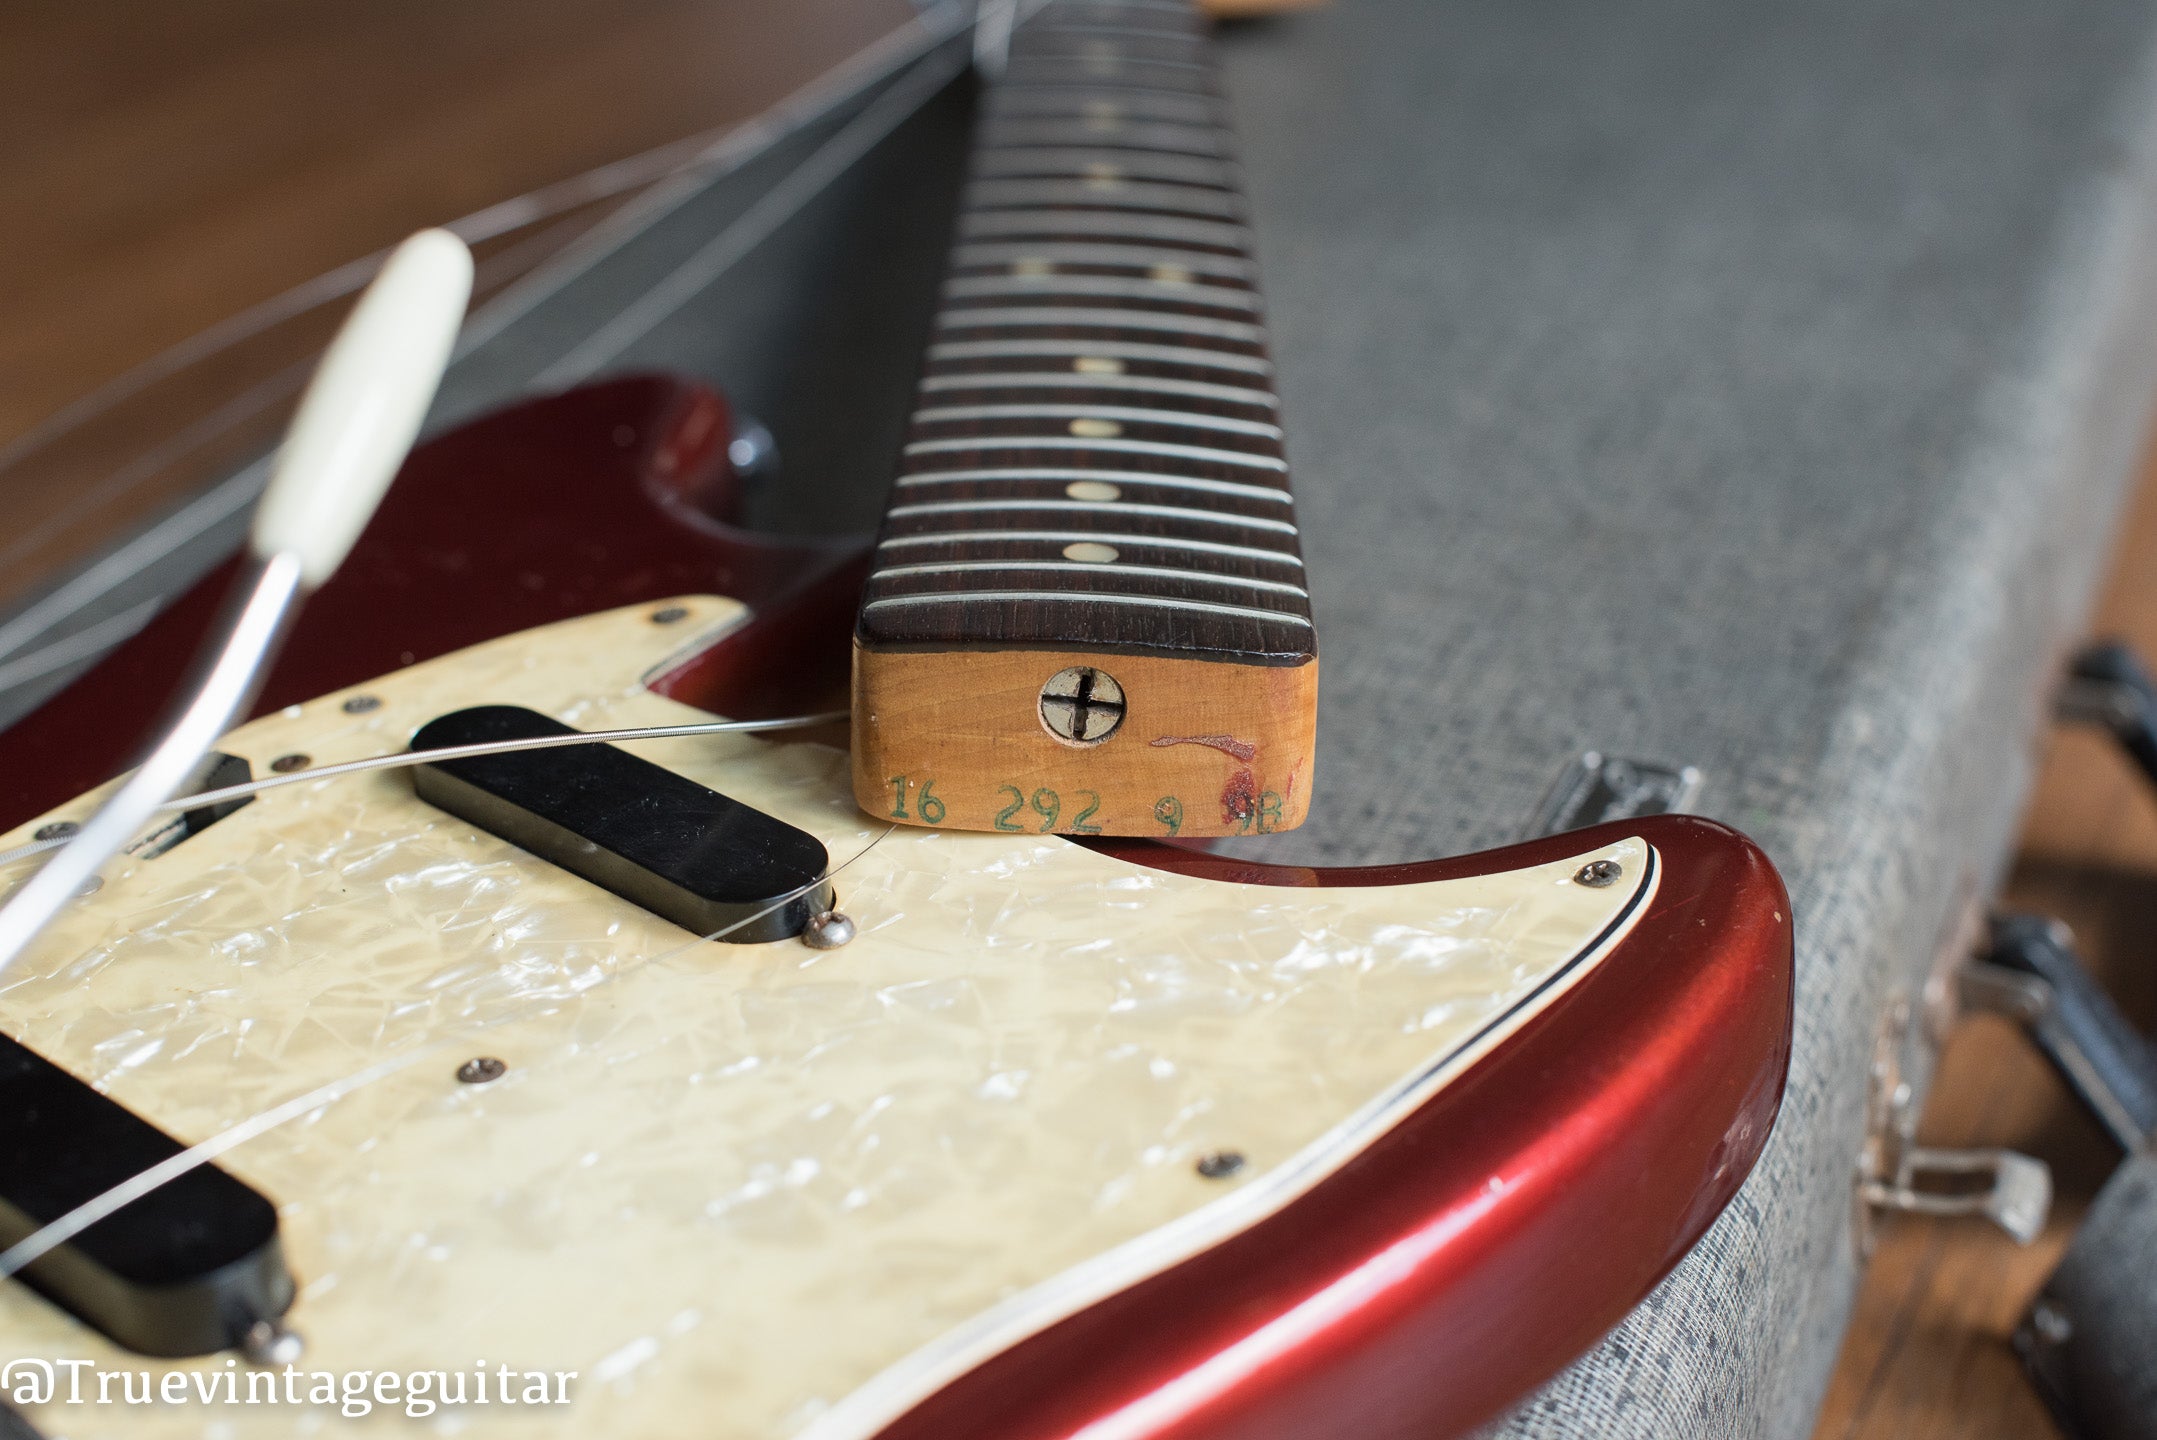 Fender green neck date stamp 1969 Mustang guitar